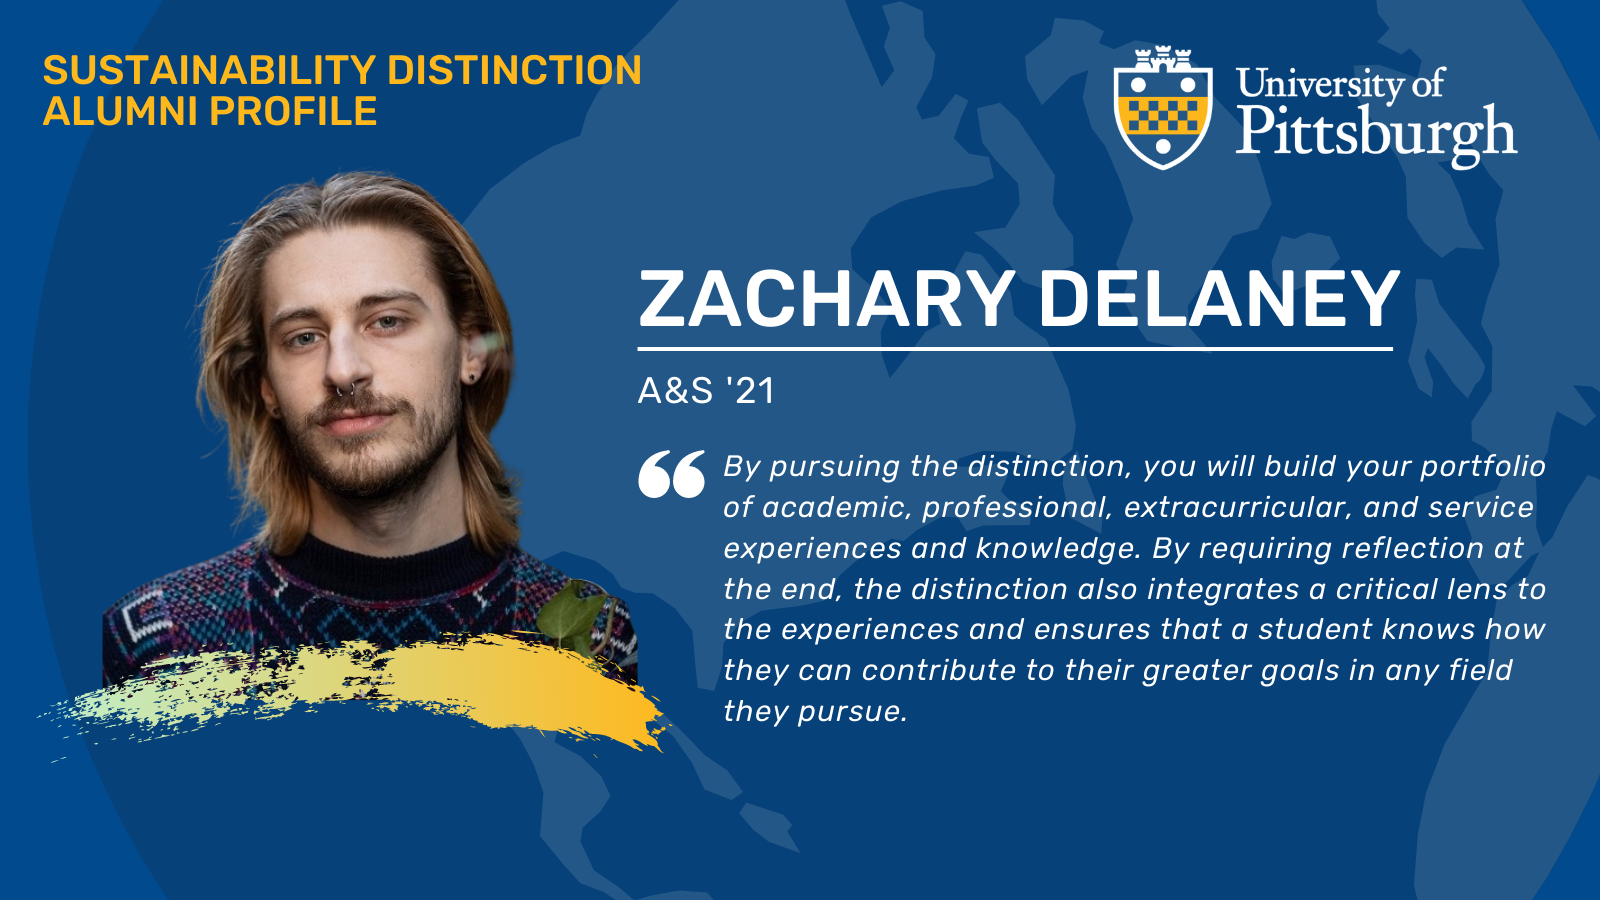 Zachary Delaney - Sustainability distinction alumni profile